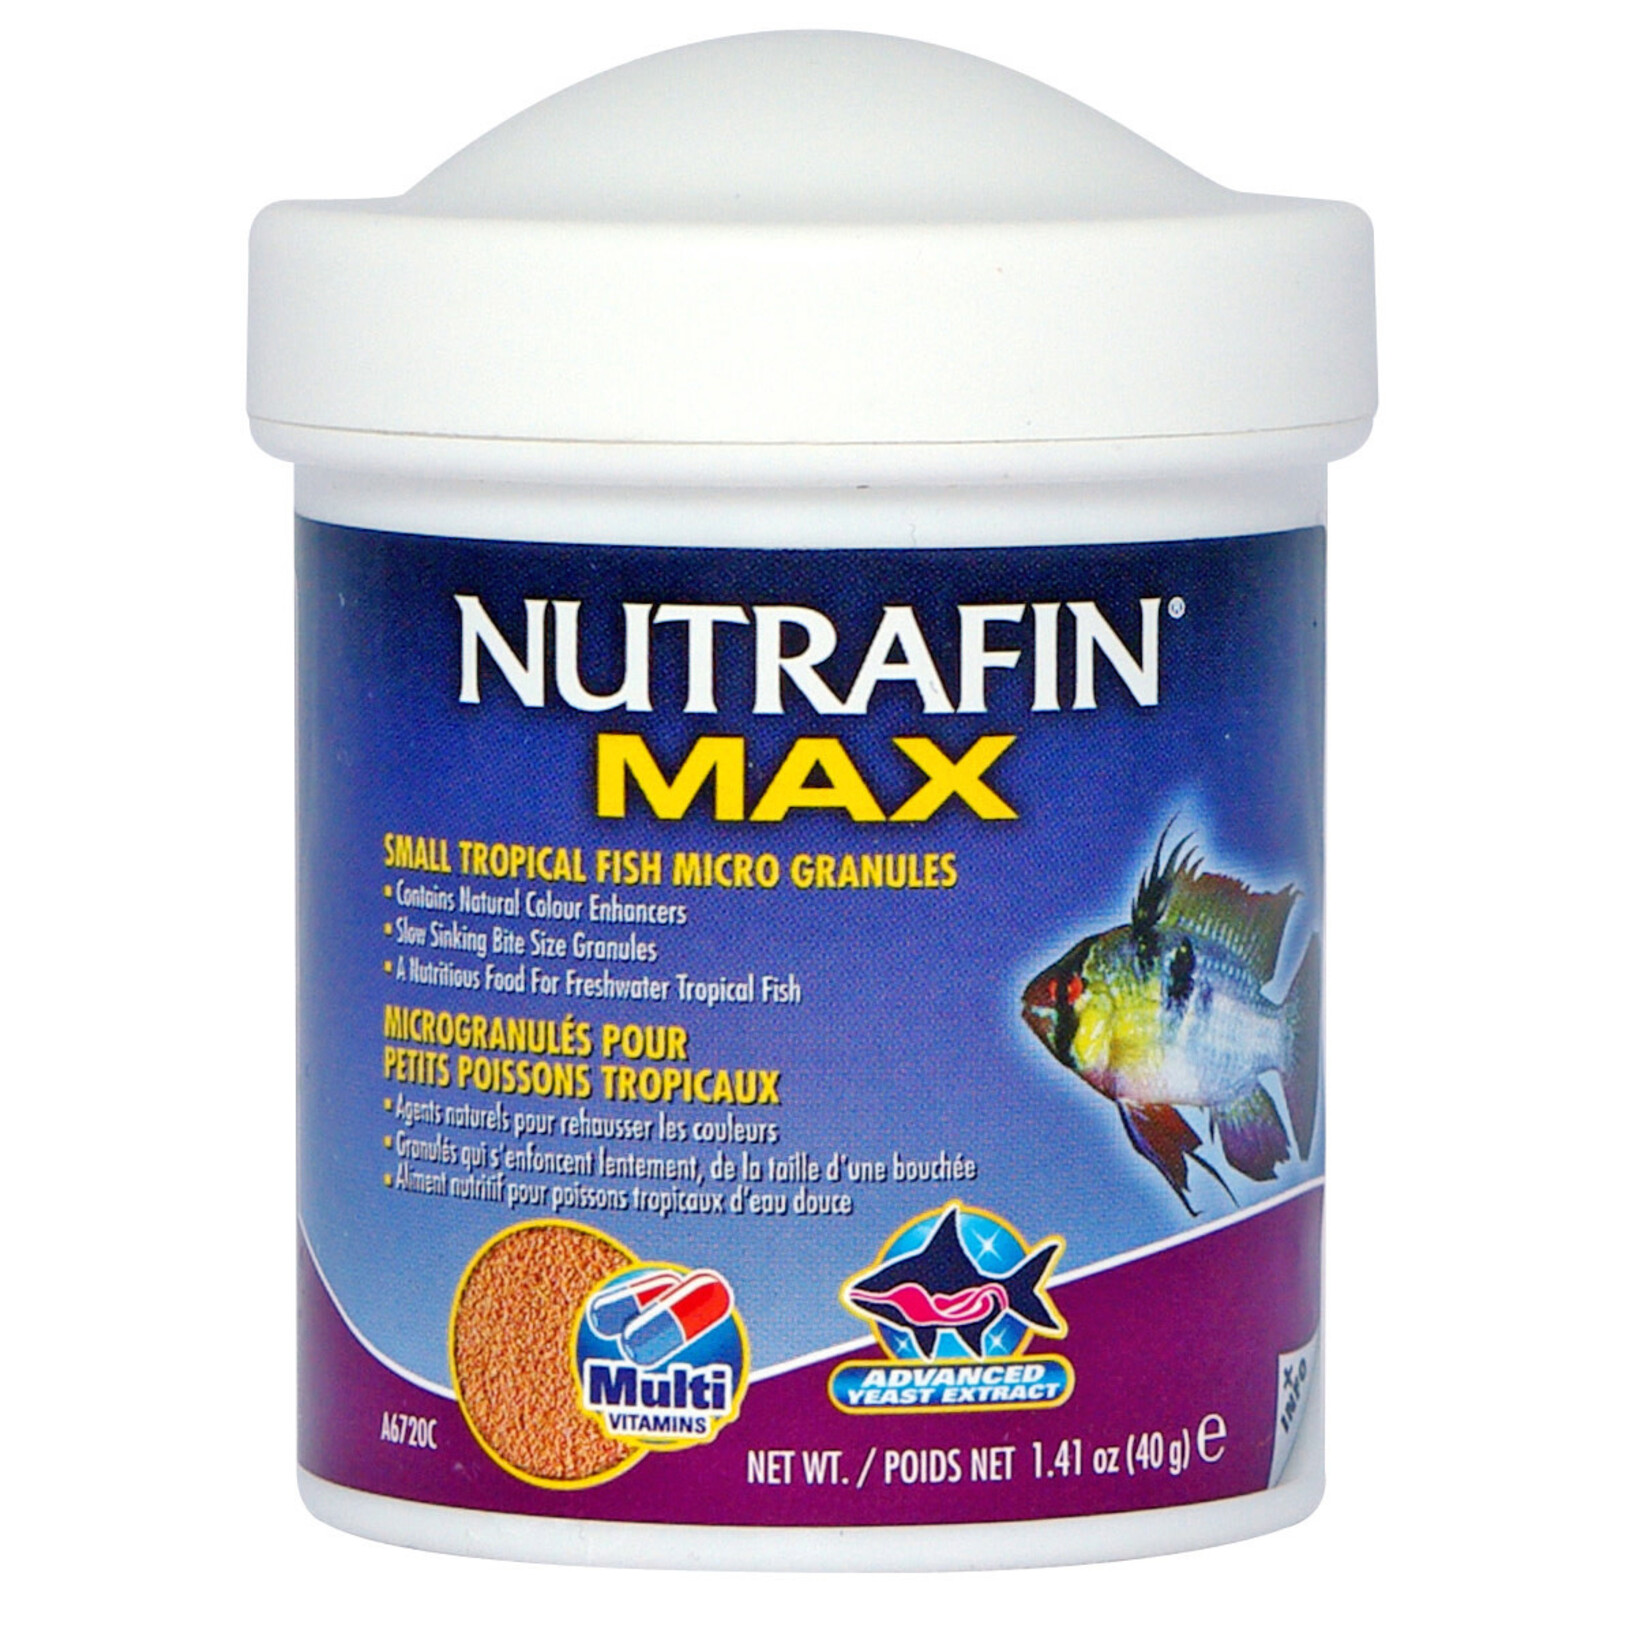 NUTRAFIN NUTRAFIN MAX MICROGRANULES POISSONS TROPICAUX 40 G